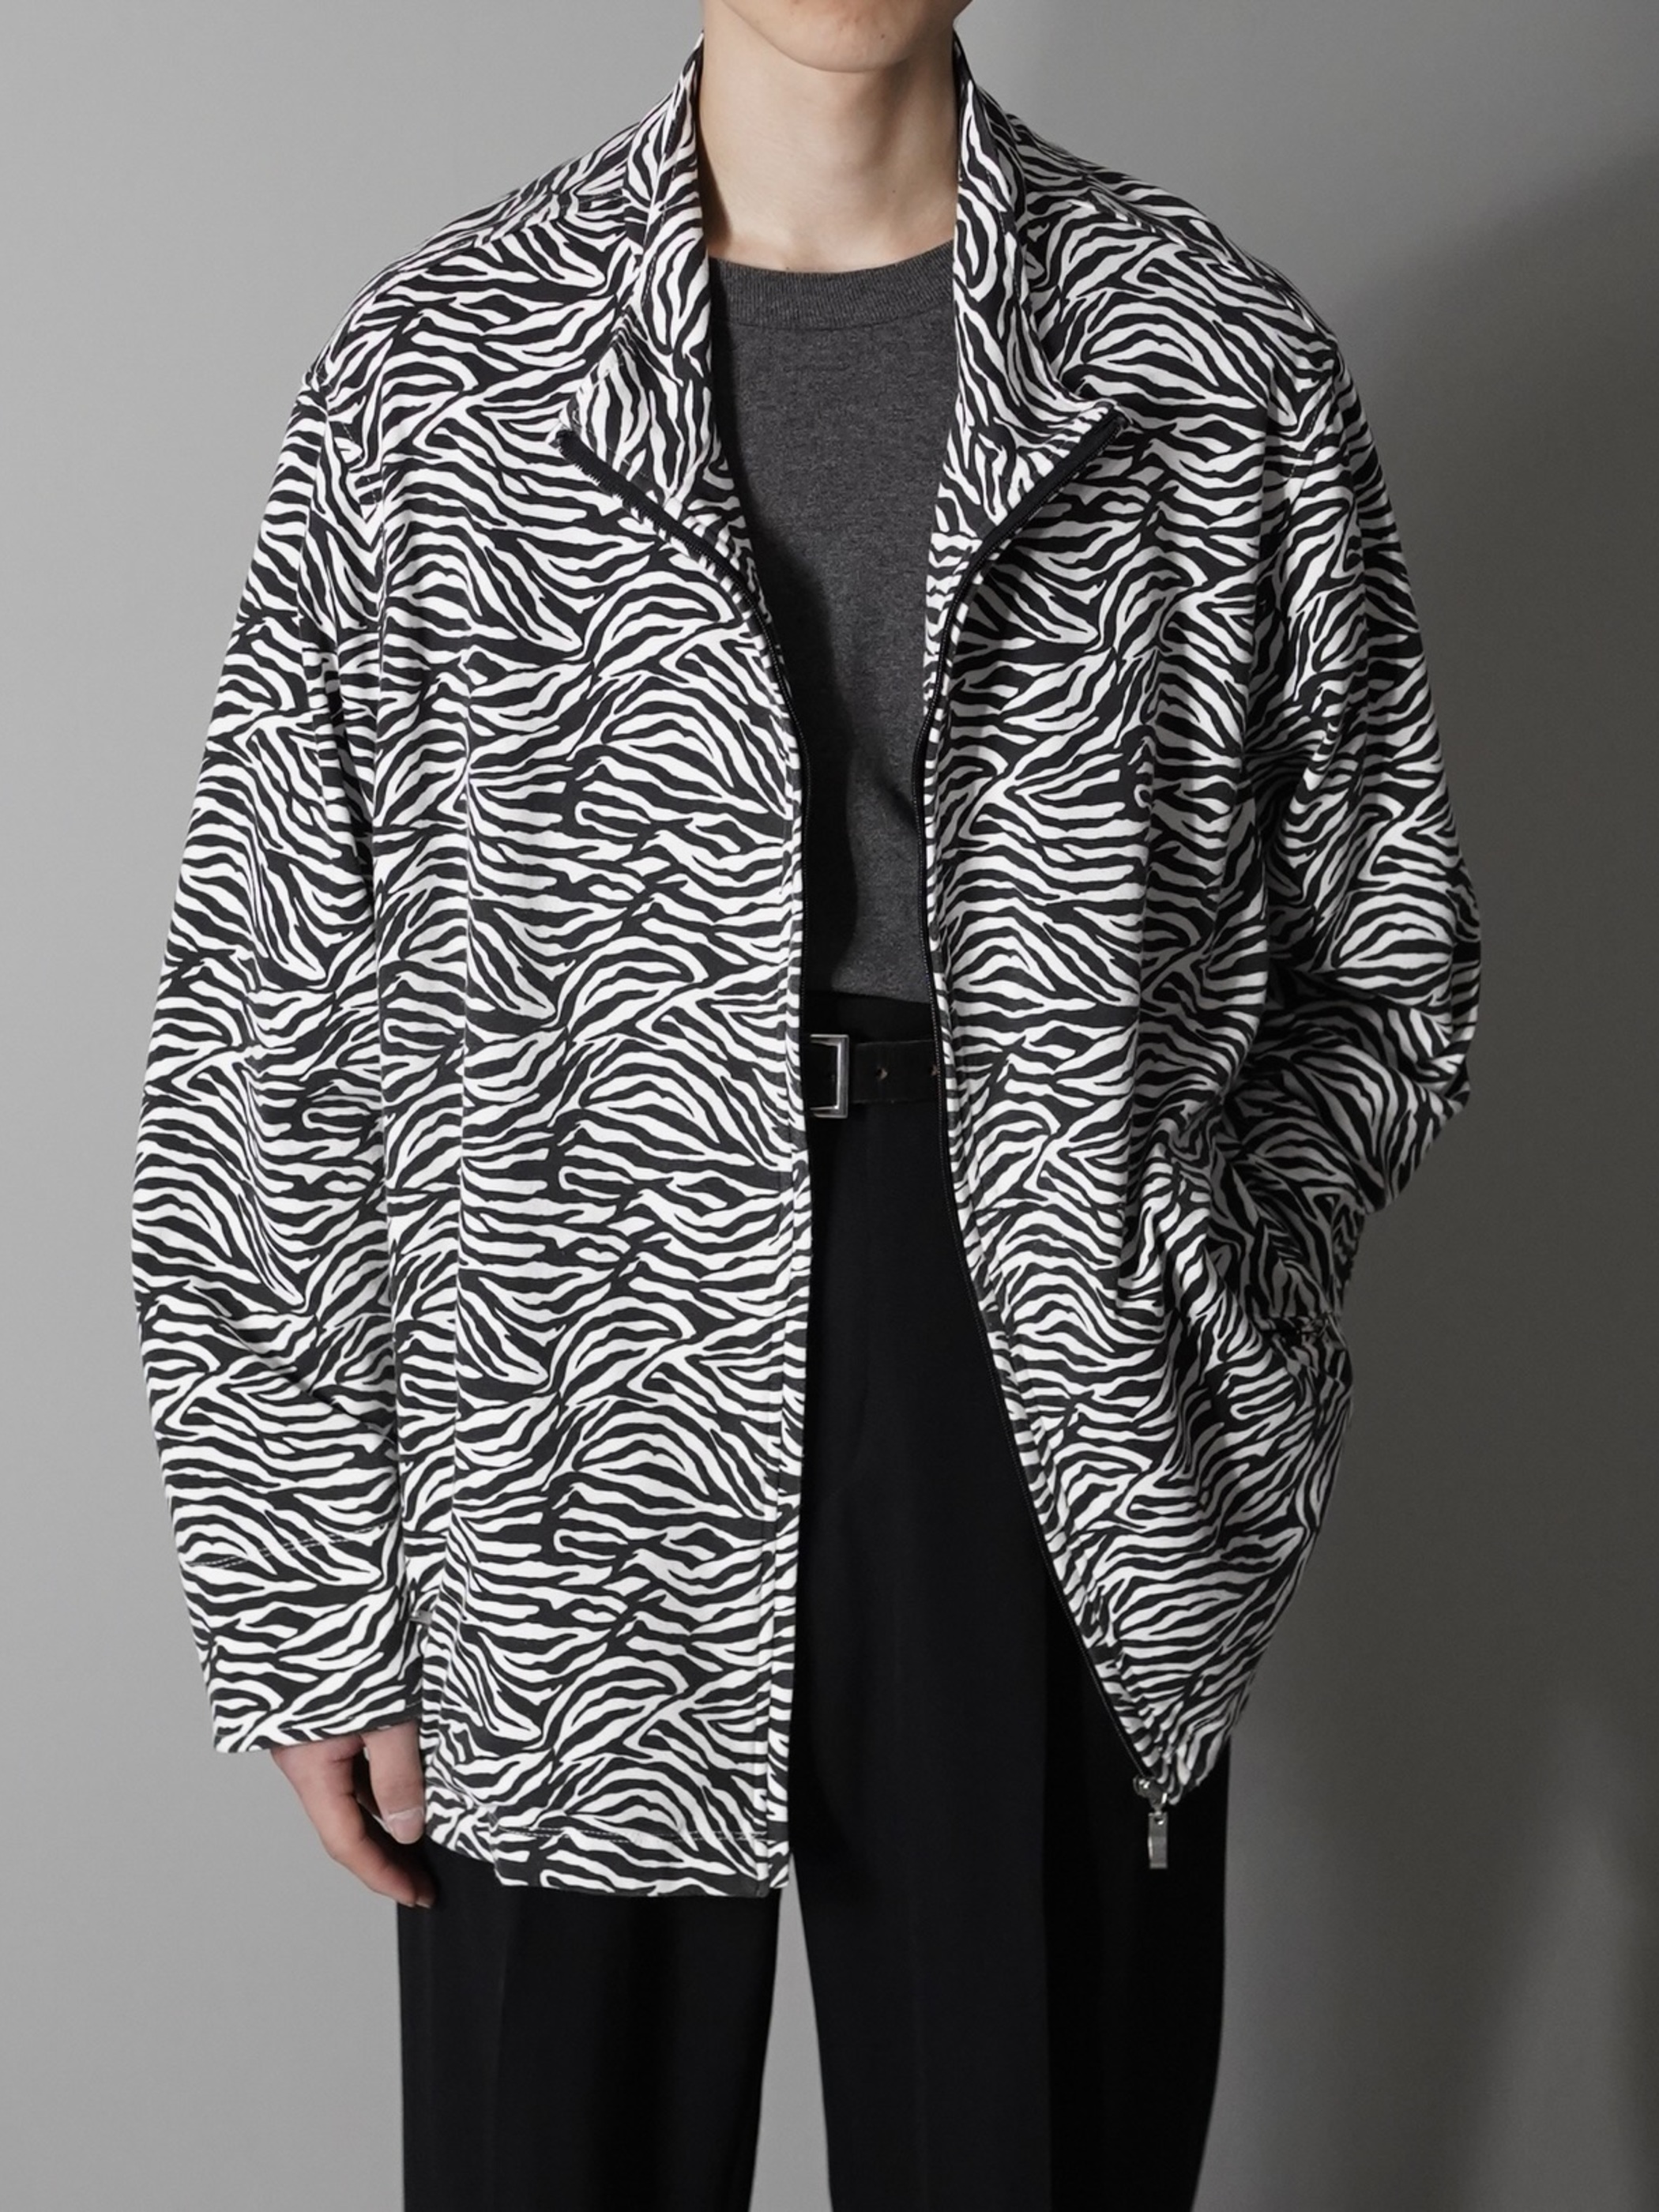 KIM ROGERS Poly cotton spandex zebra pattern jacket